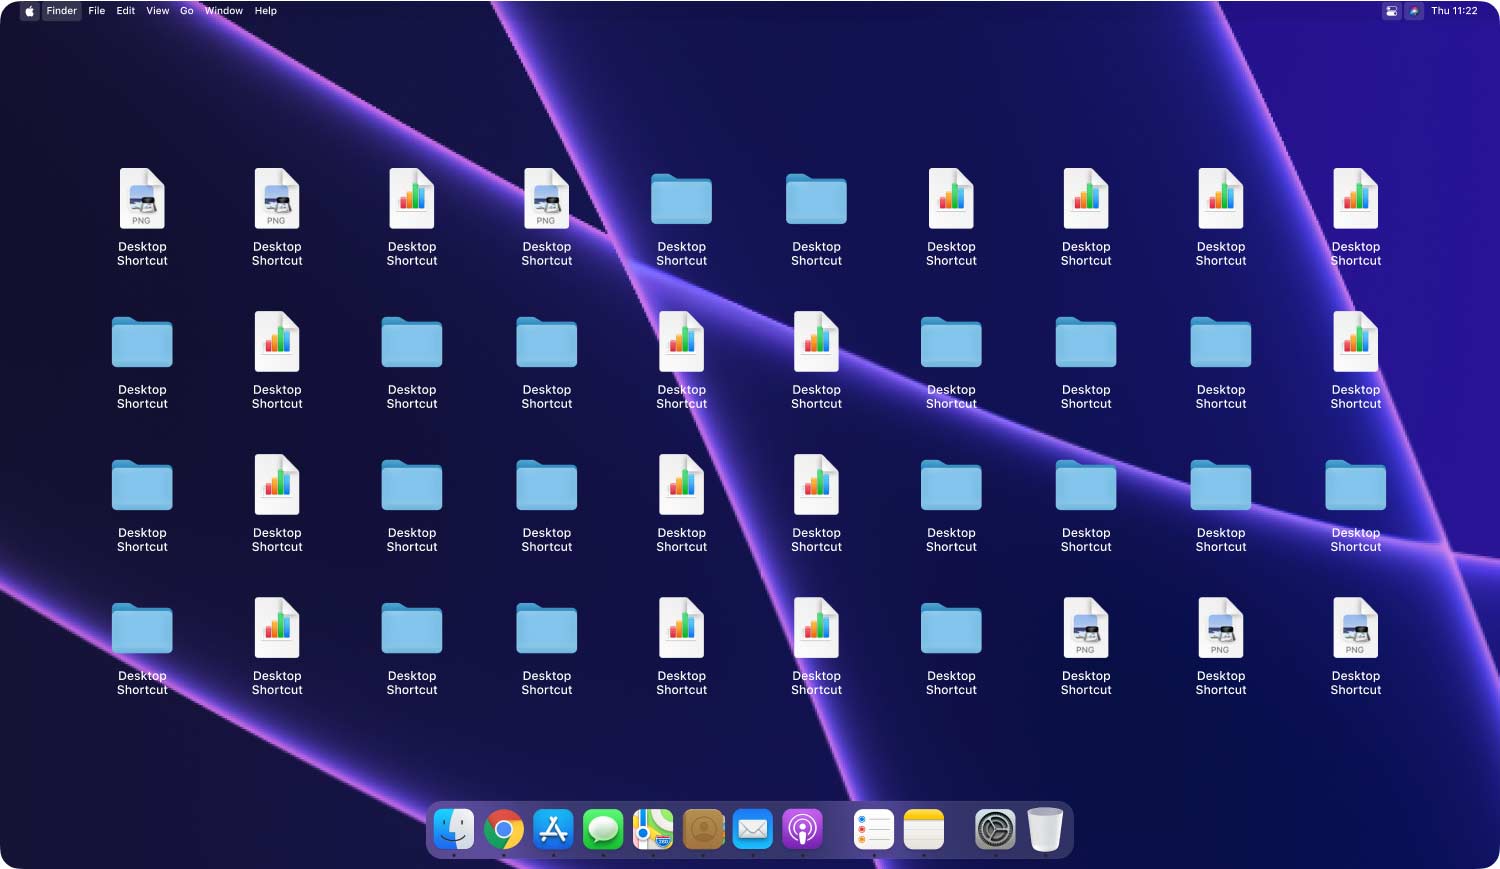 Cluttered Desktop